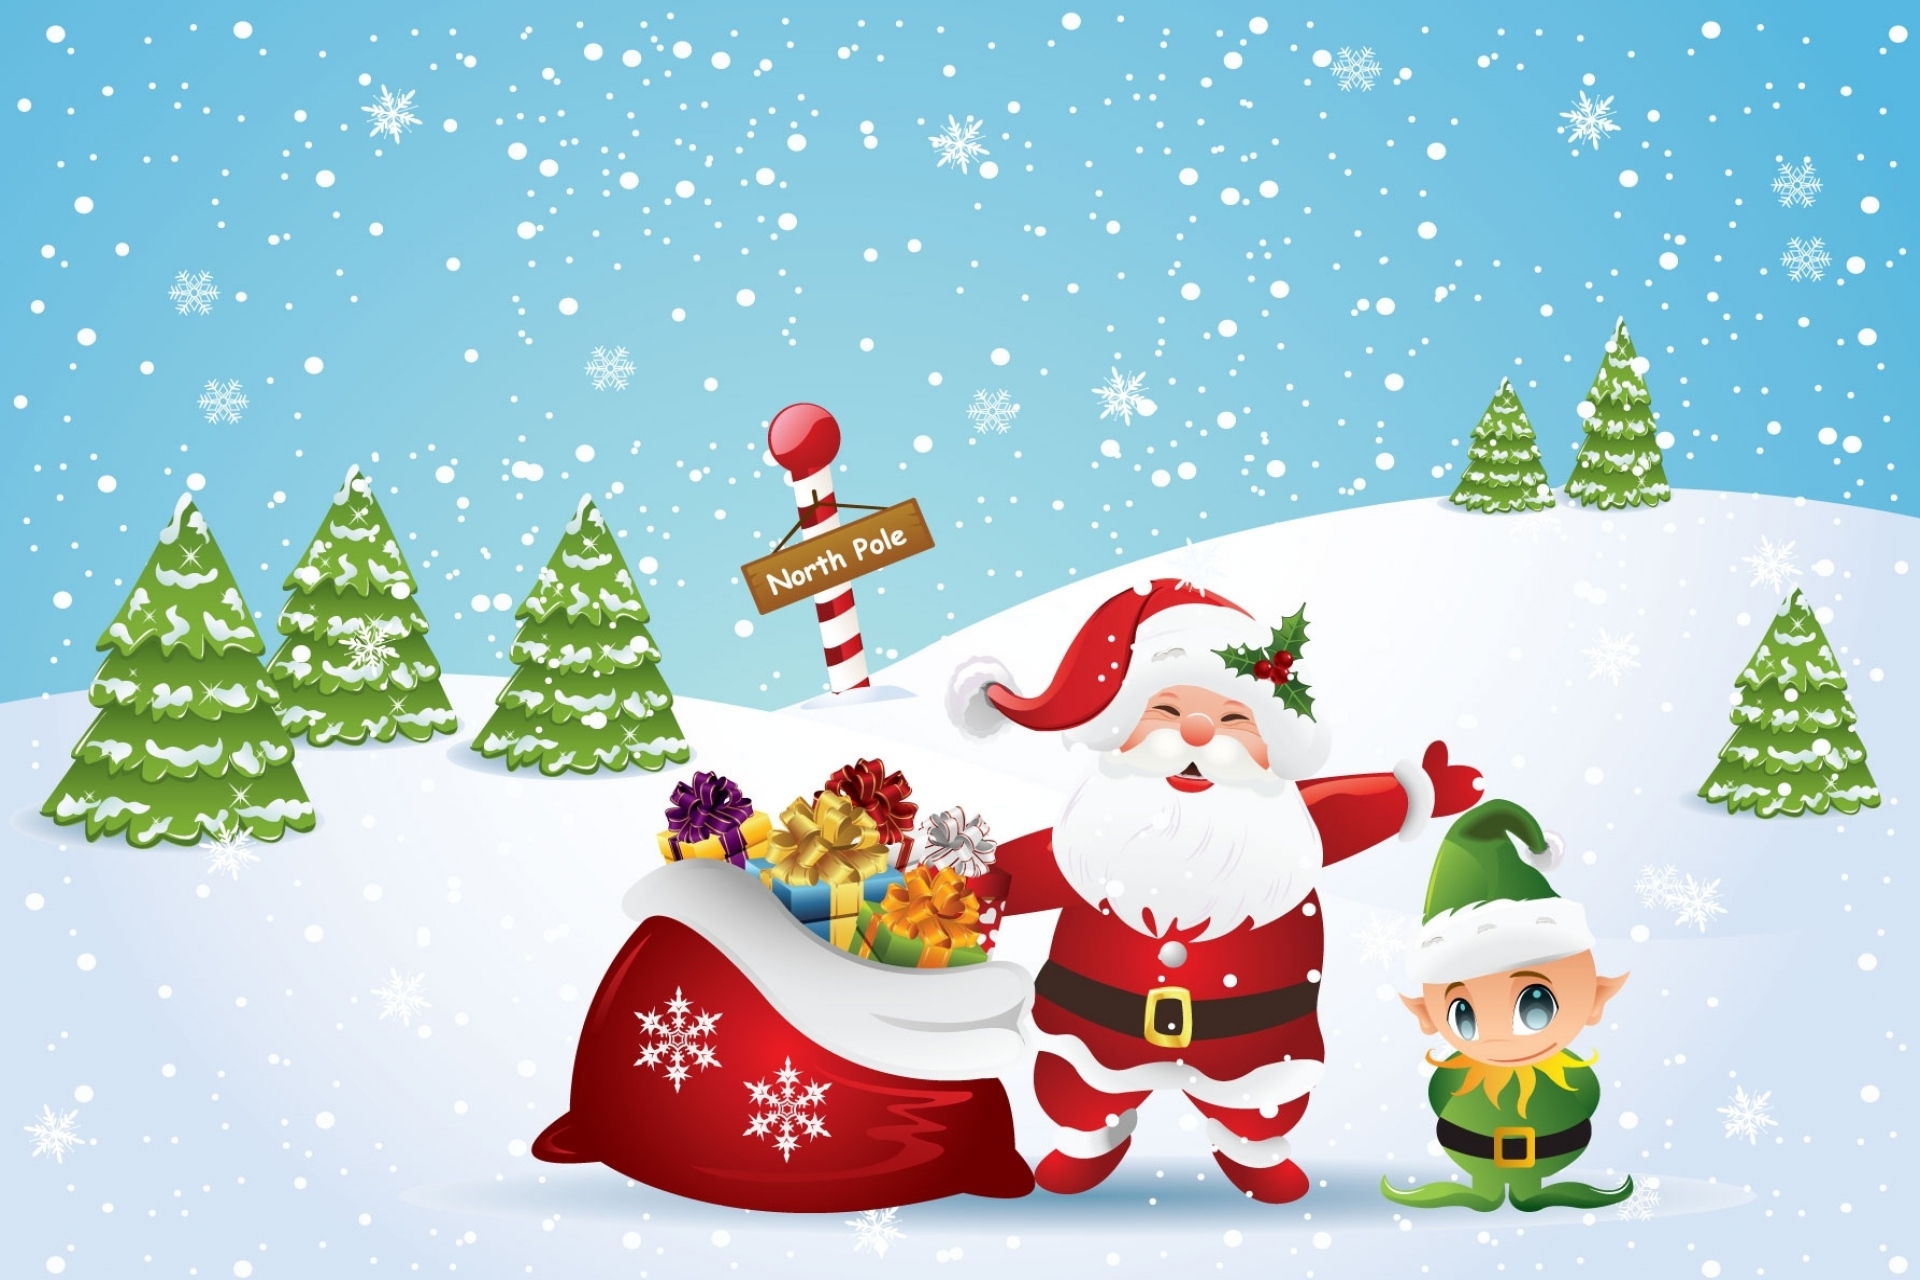 santa claus, snowfall, holiday, christmas, elf, gift, north pole, snow, tree